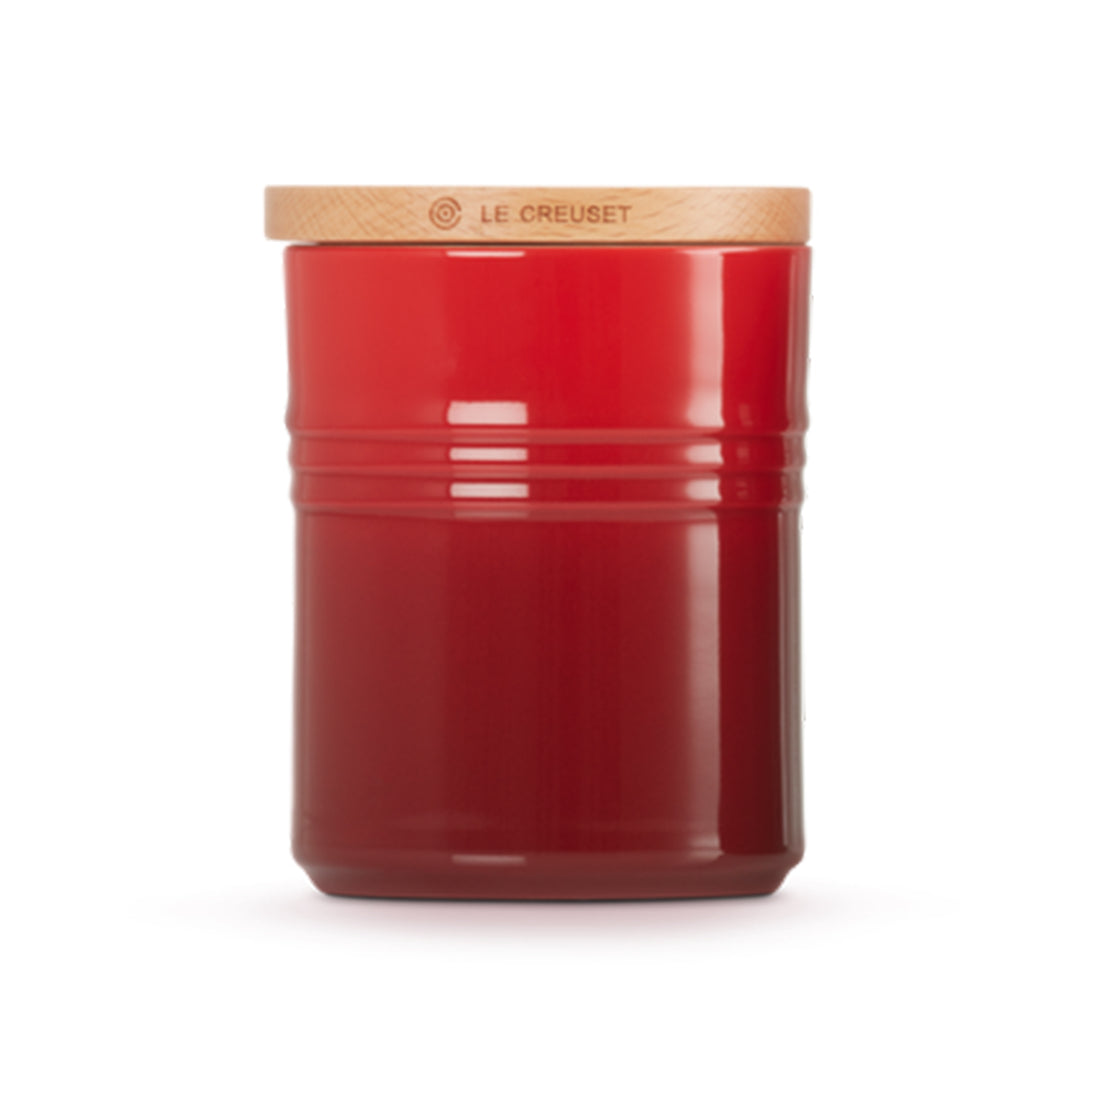 Le Creuset, Le Creuset Stoneware Medium Storage Jar with Wooden Lid - Cerise, Redber Coffee